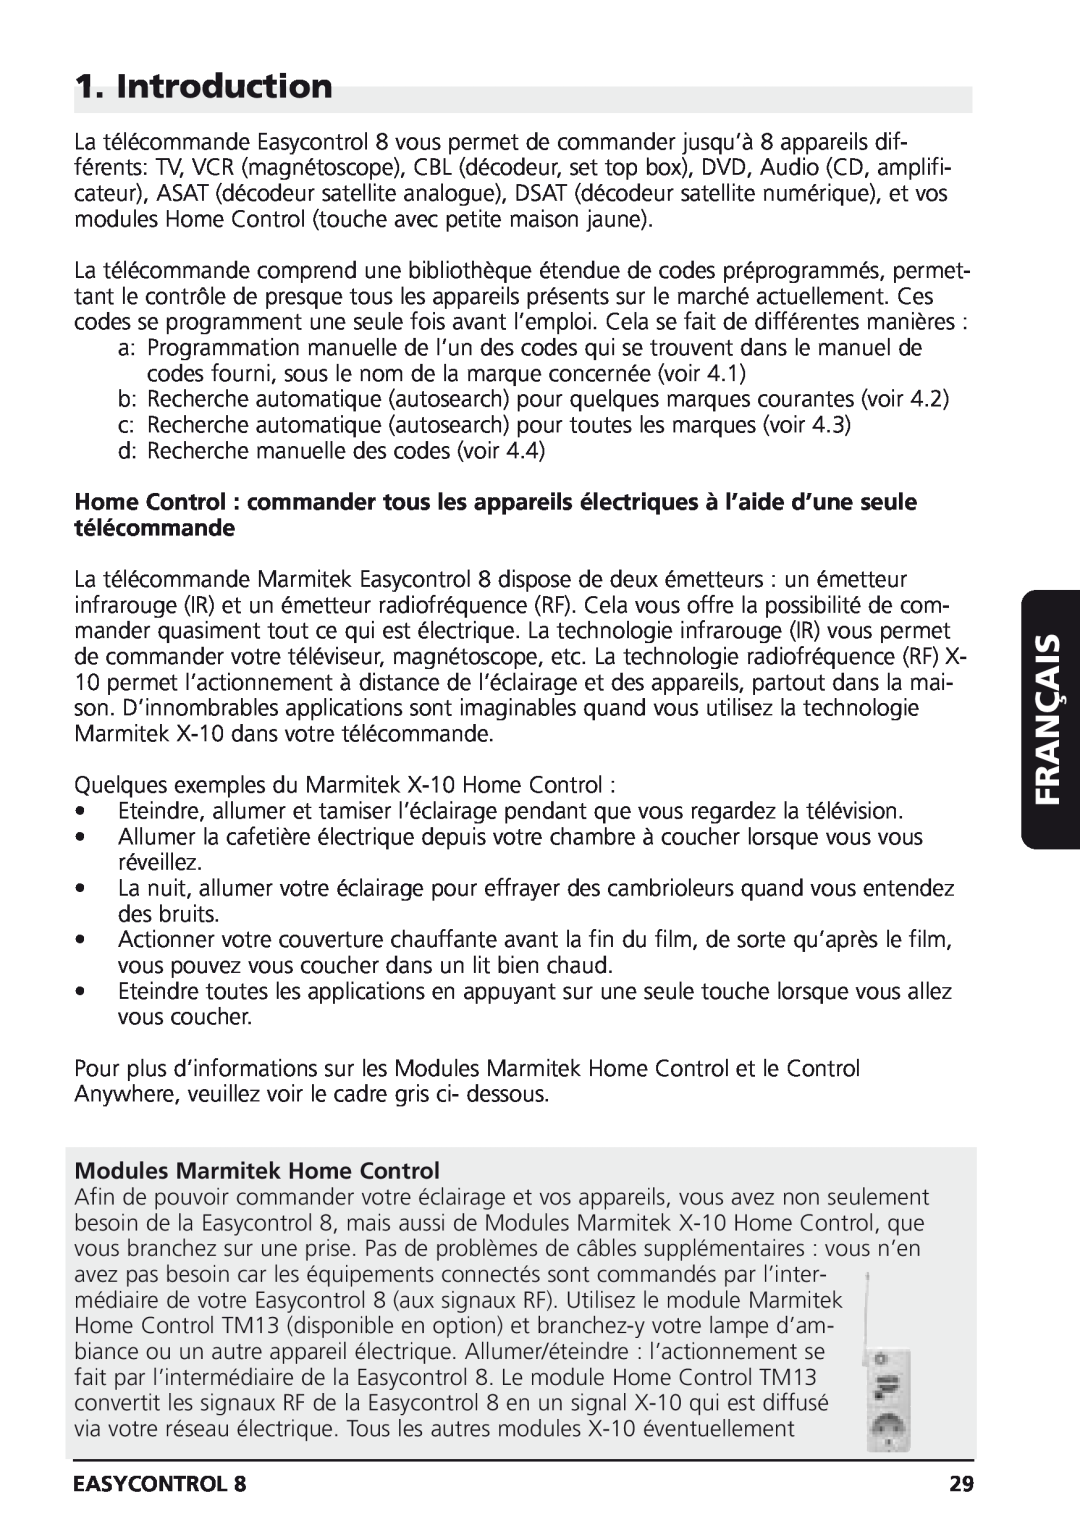 Marmitek Easycontrol 8 owner manual Introduction, Français, Modules Marmitek Home Control 